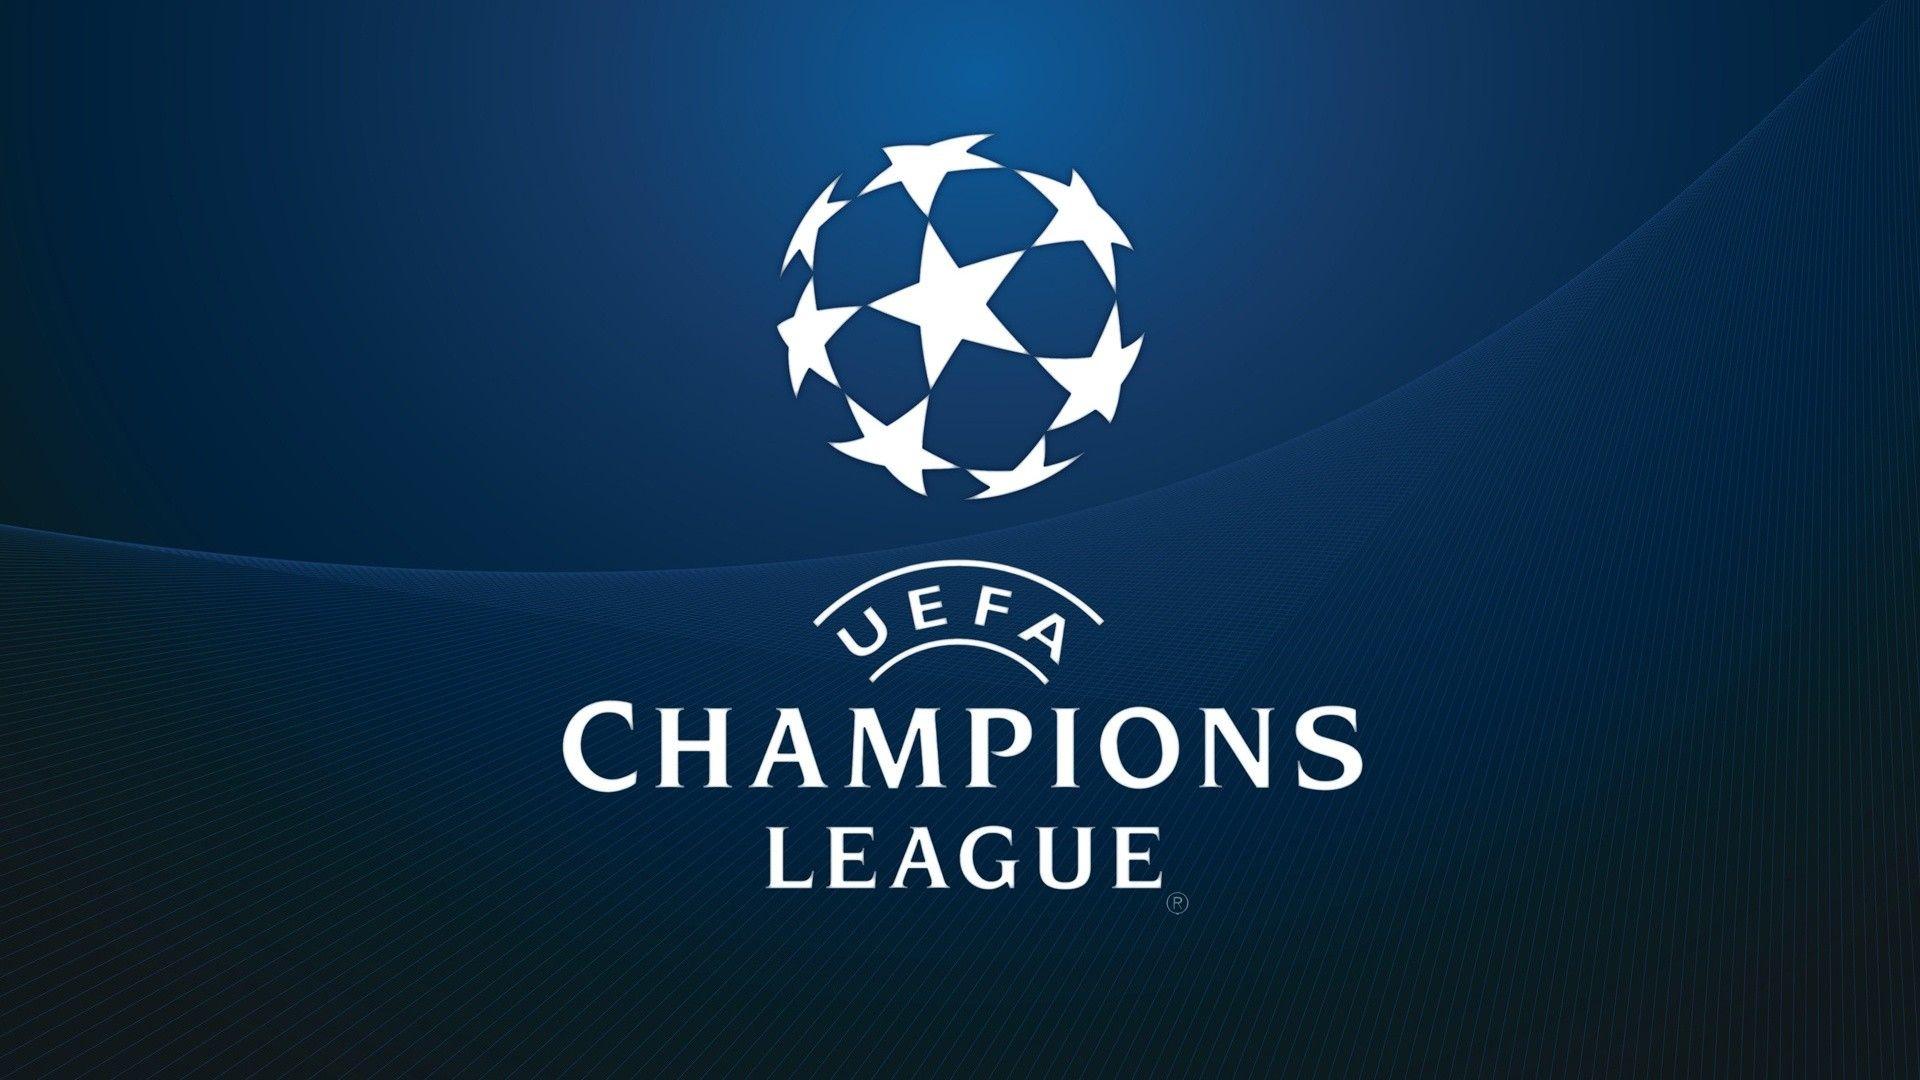 UEFA Champions League Logo HD Wallpaper HD Wallpaper of. Champions league logo, Uefa champions league table, Uefa champions league